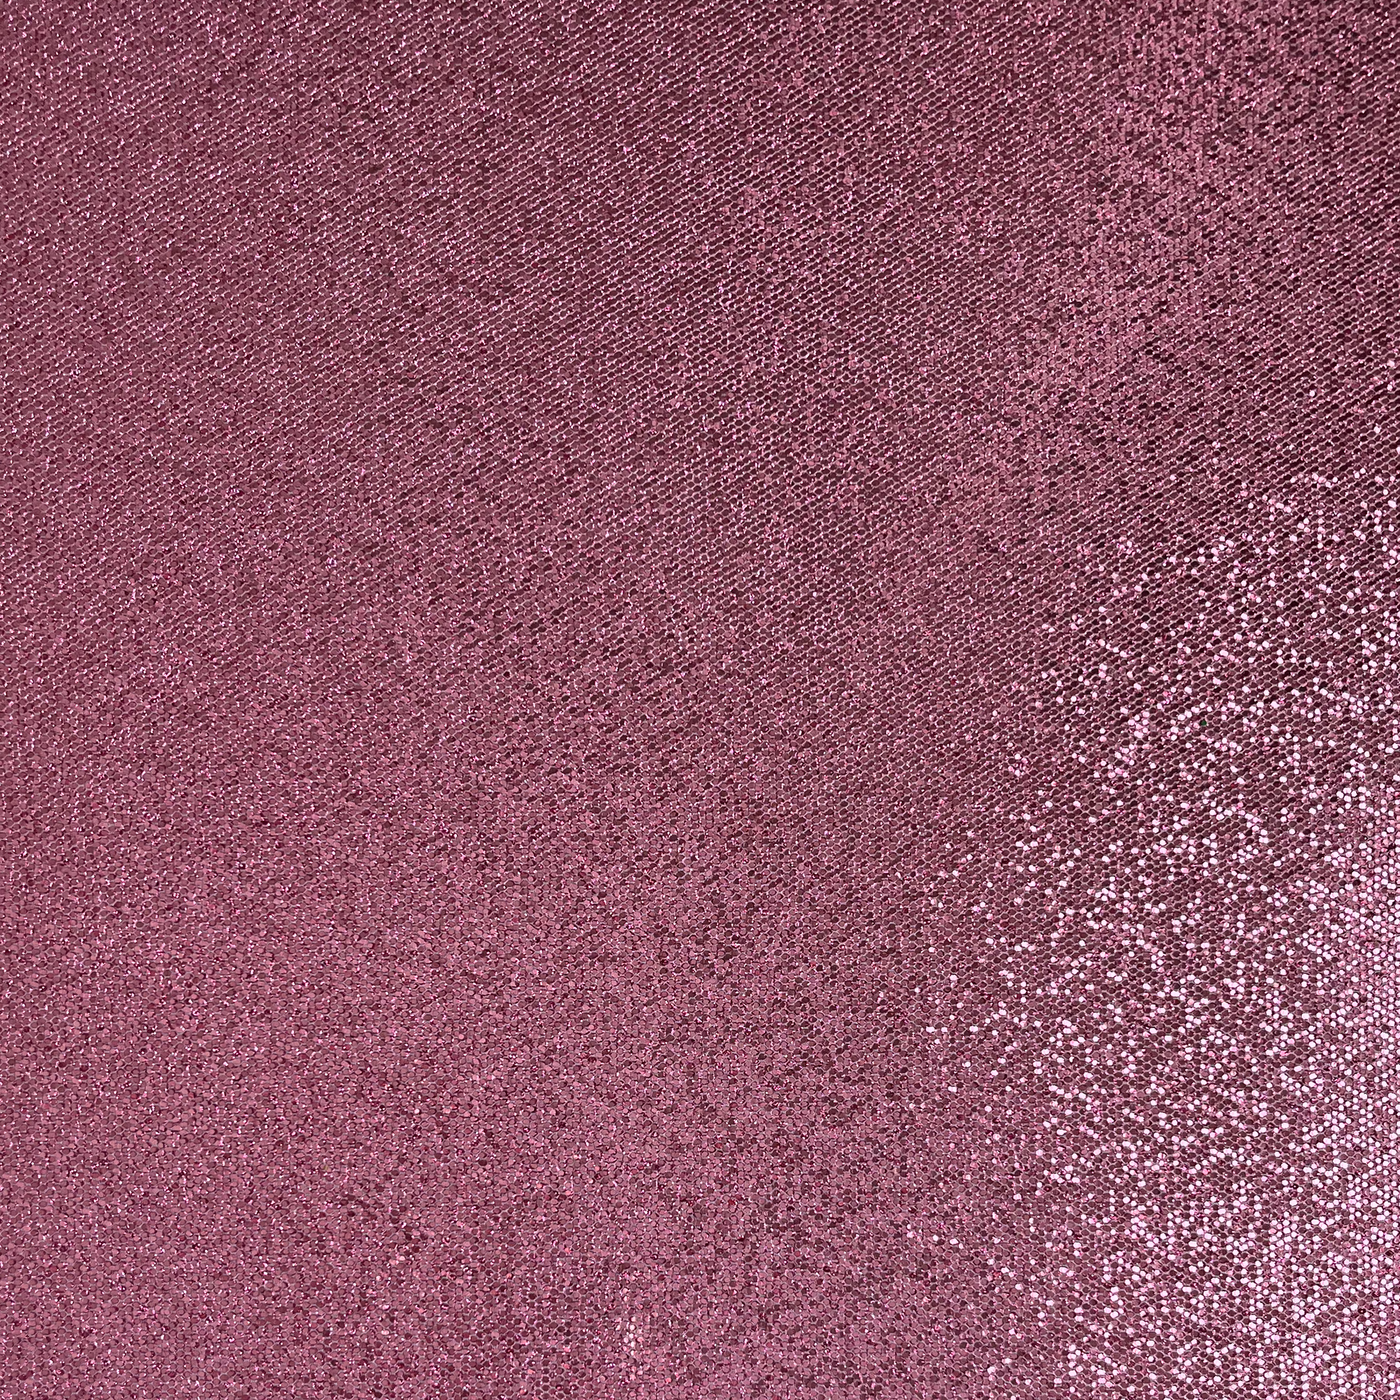 PINK LIPSTICK Sequin Glitter Cardstock - Bright pink disco ball glitter 